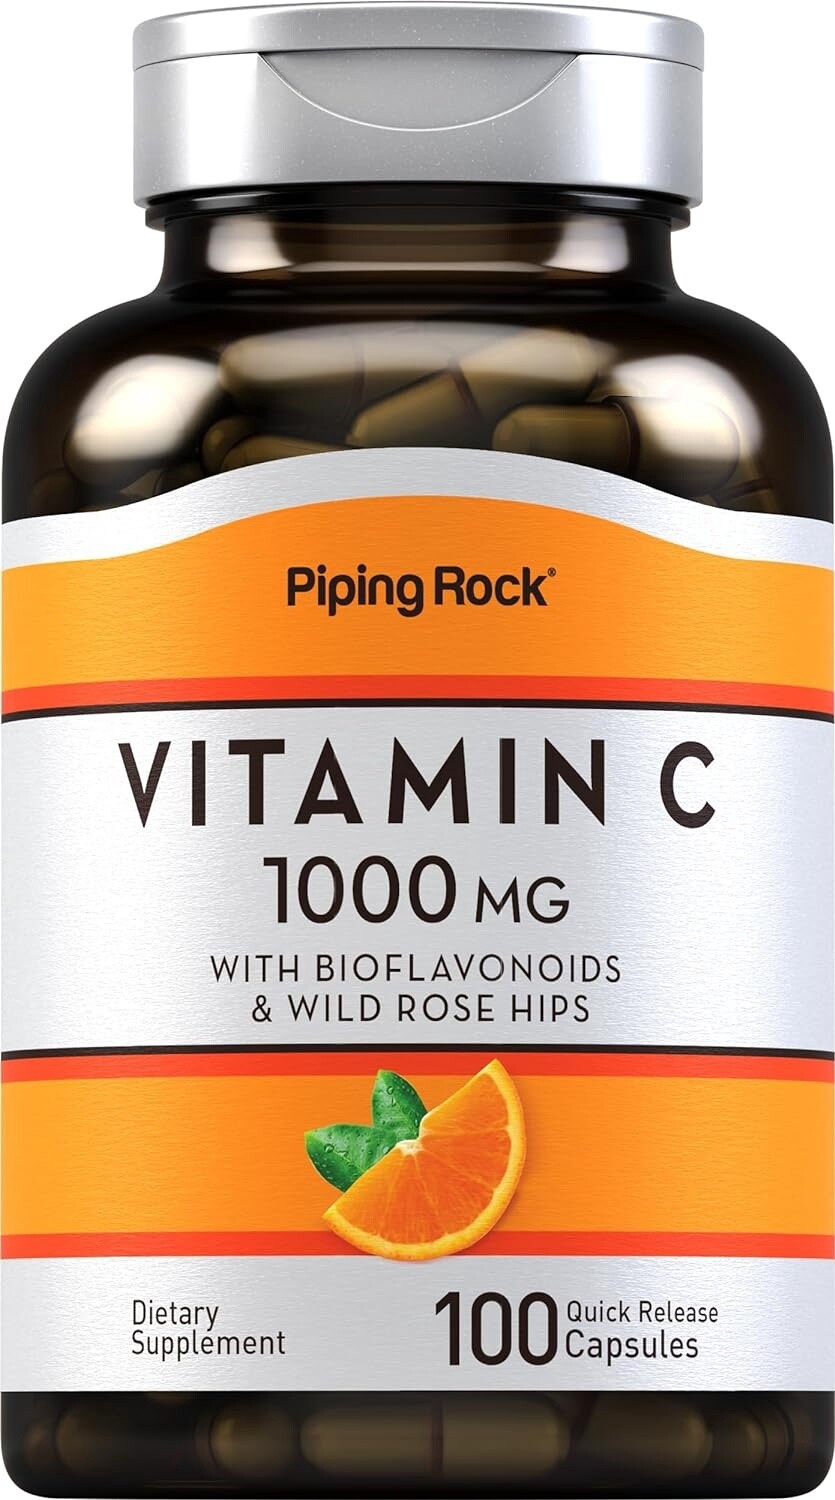 Piping Rock Vitamin C 1000 mg - 100 capsules